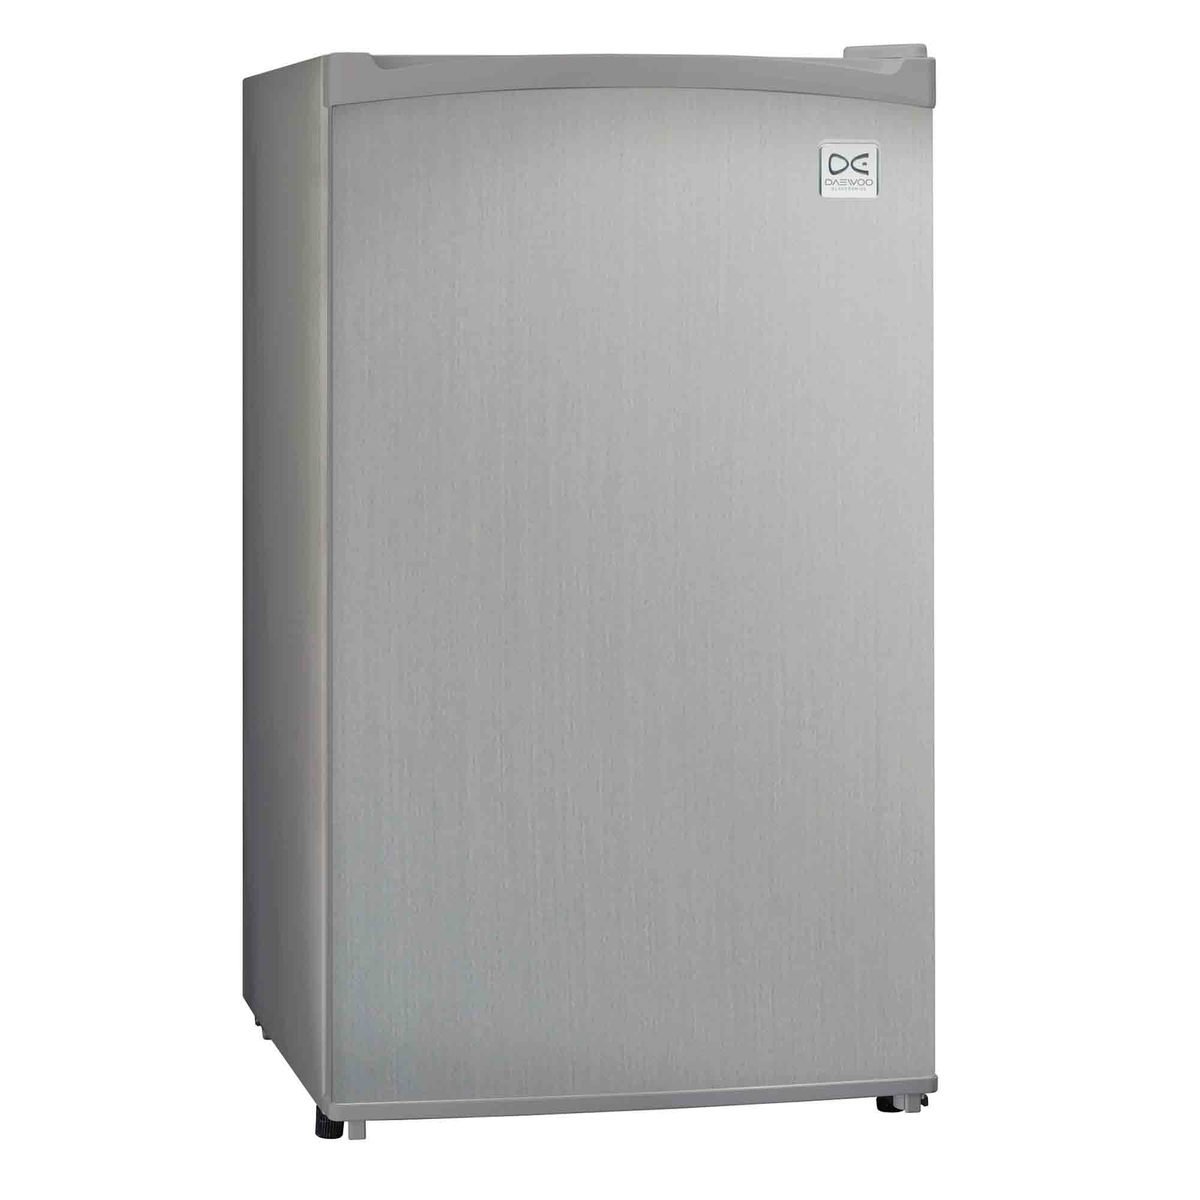 Daewoo Single Door Refrigerator FN-146s 140 Ltr